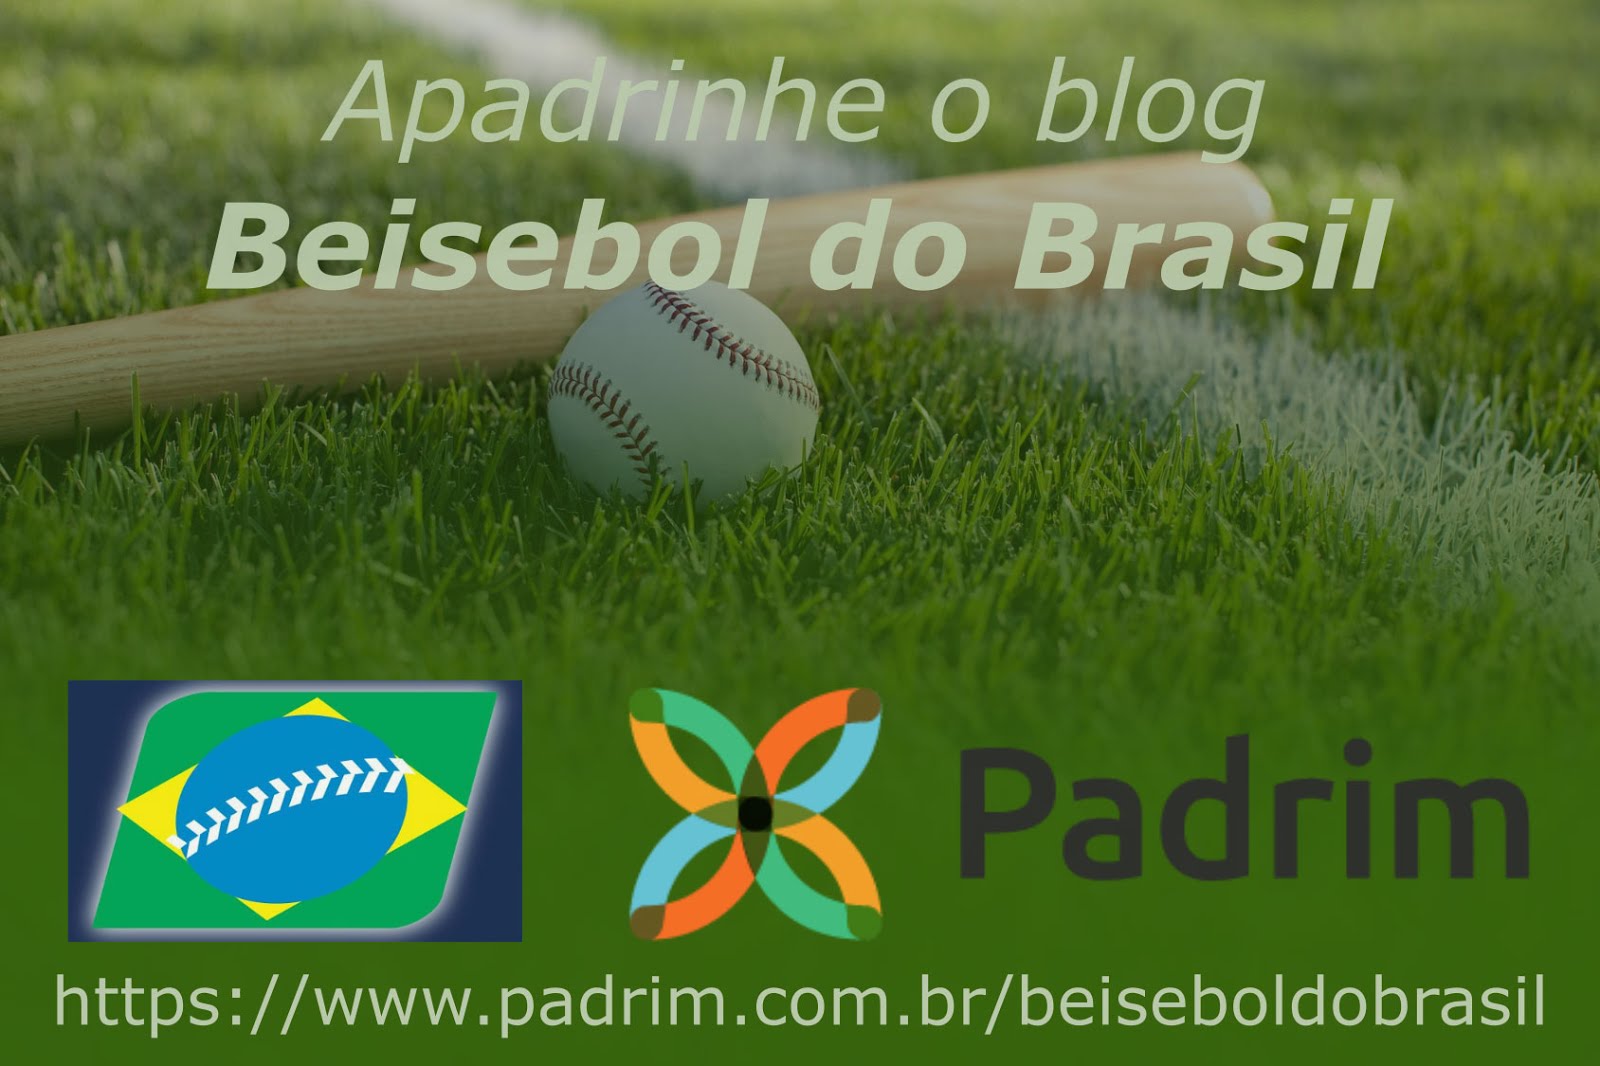 Apadrinhe o blog Beisebol do Brasil